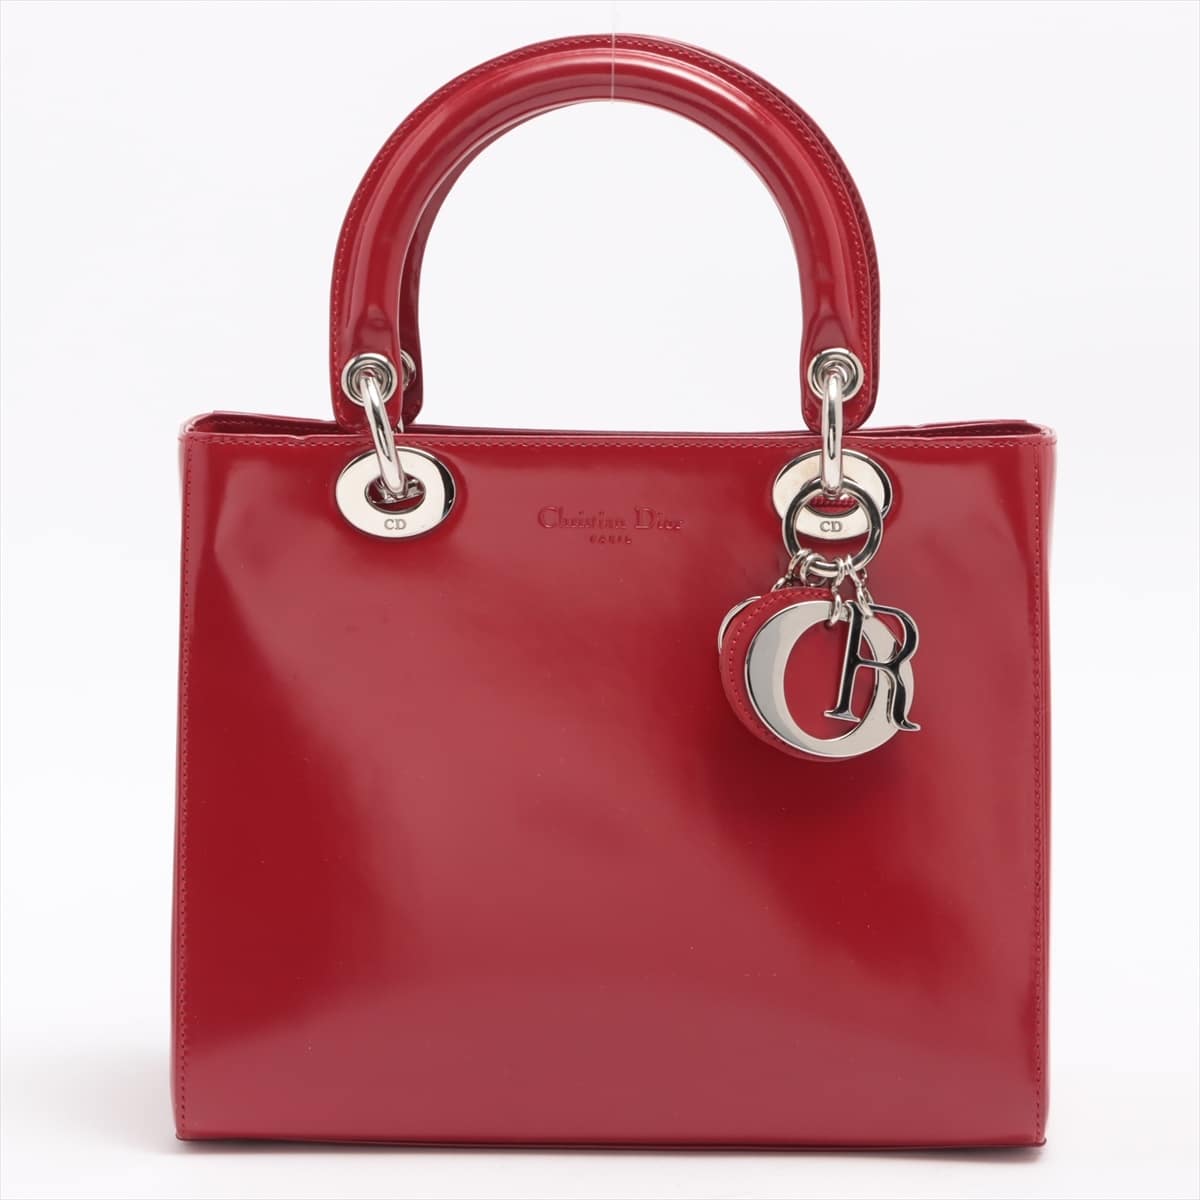 Christian Dior Lady Dior Patent leather 2way handbag Red